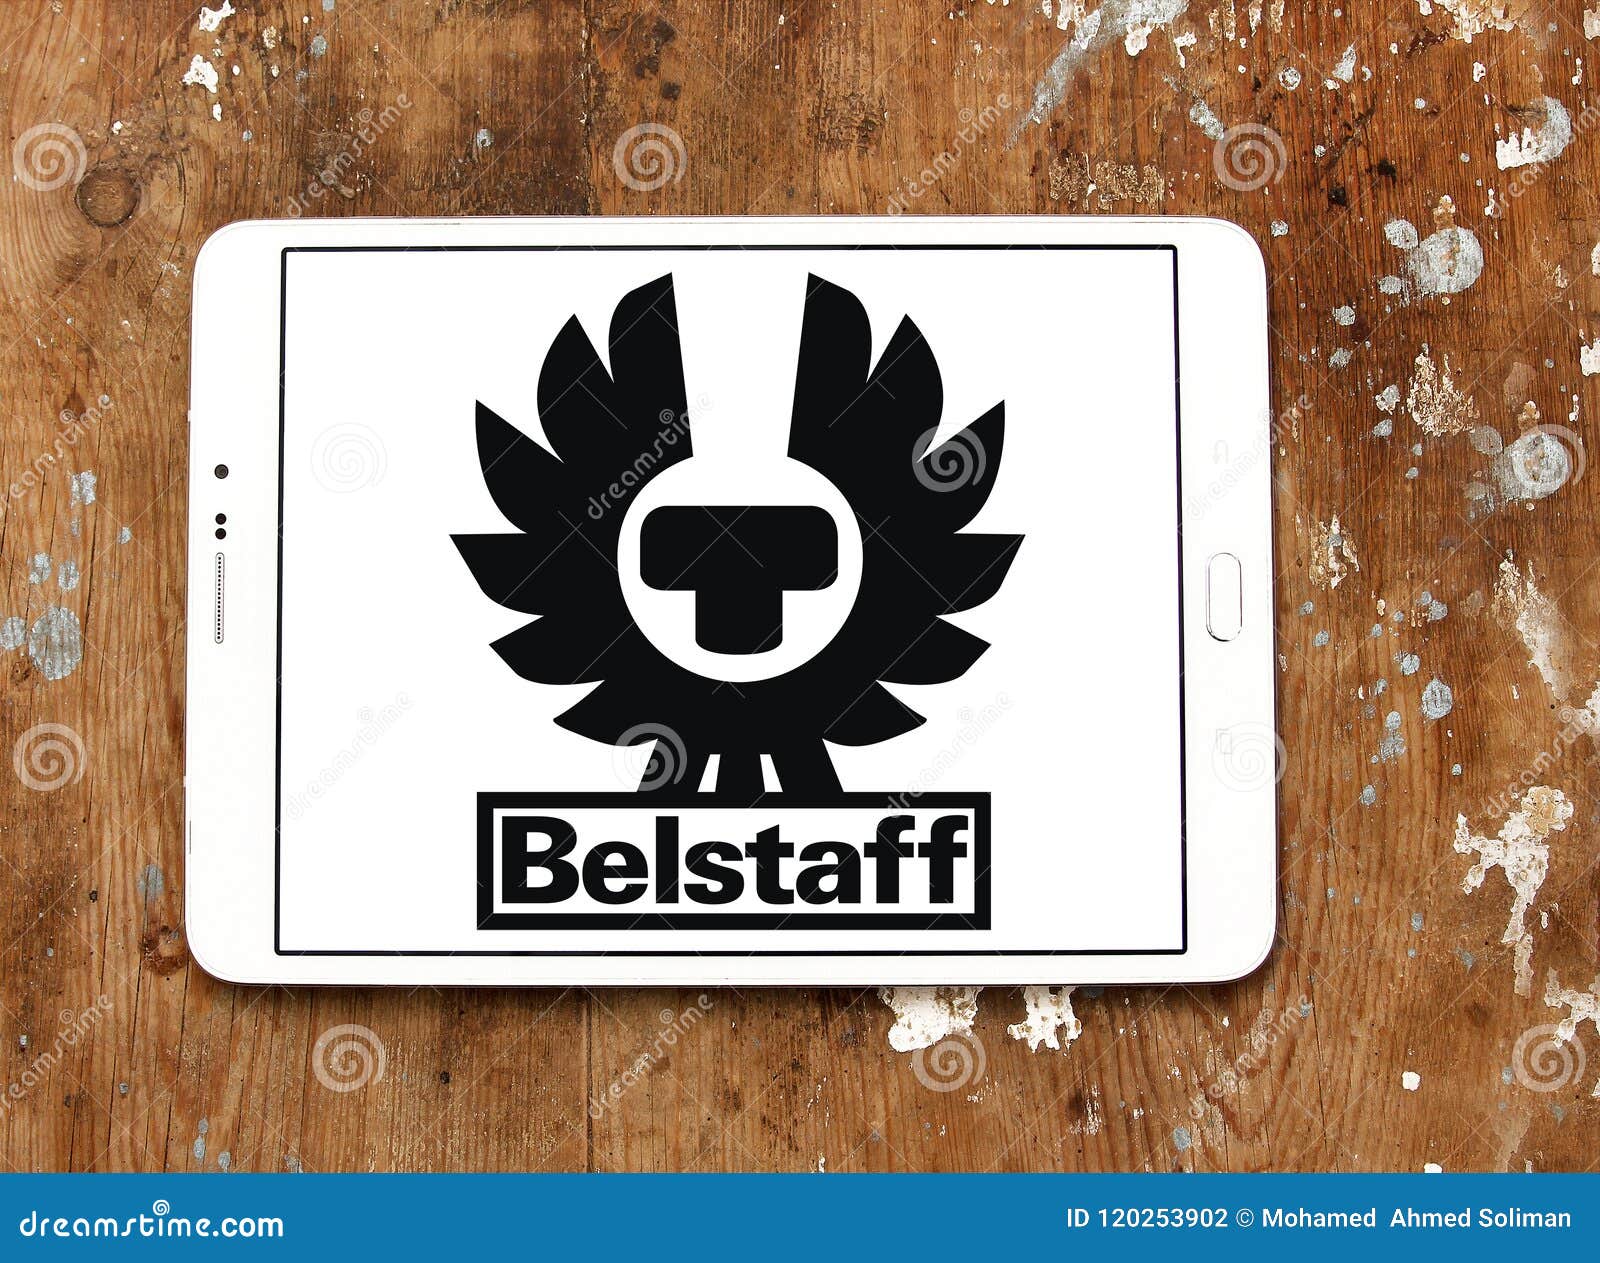 Belstaff Clothing Brand Logo Editorial Photography